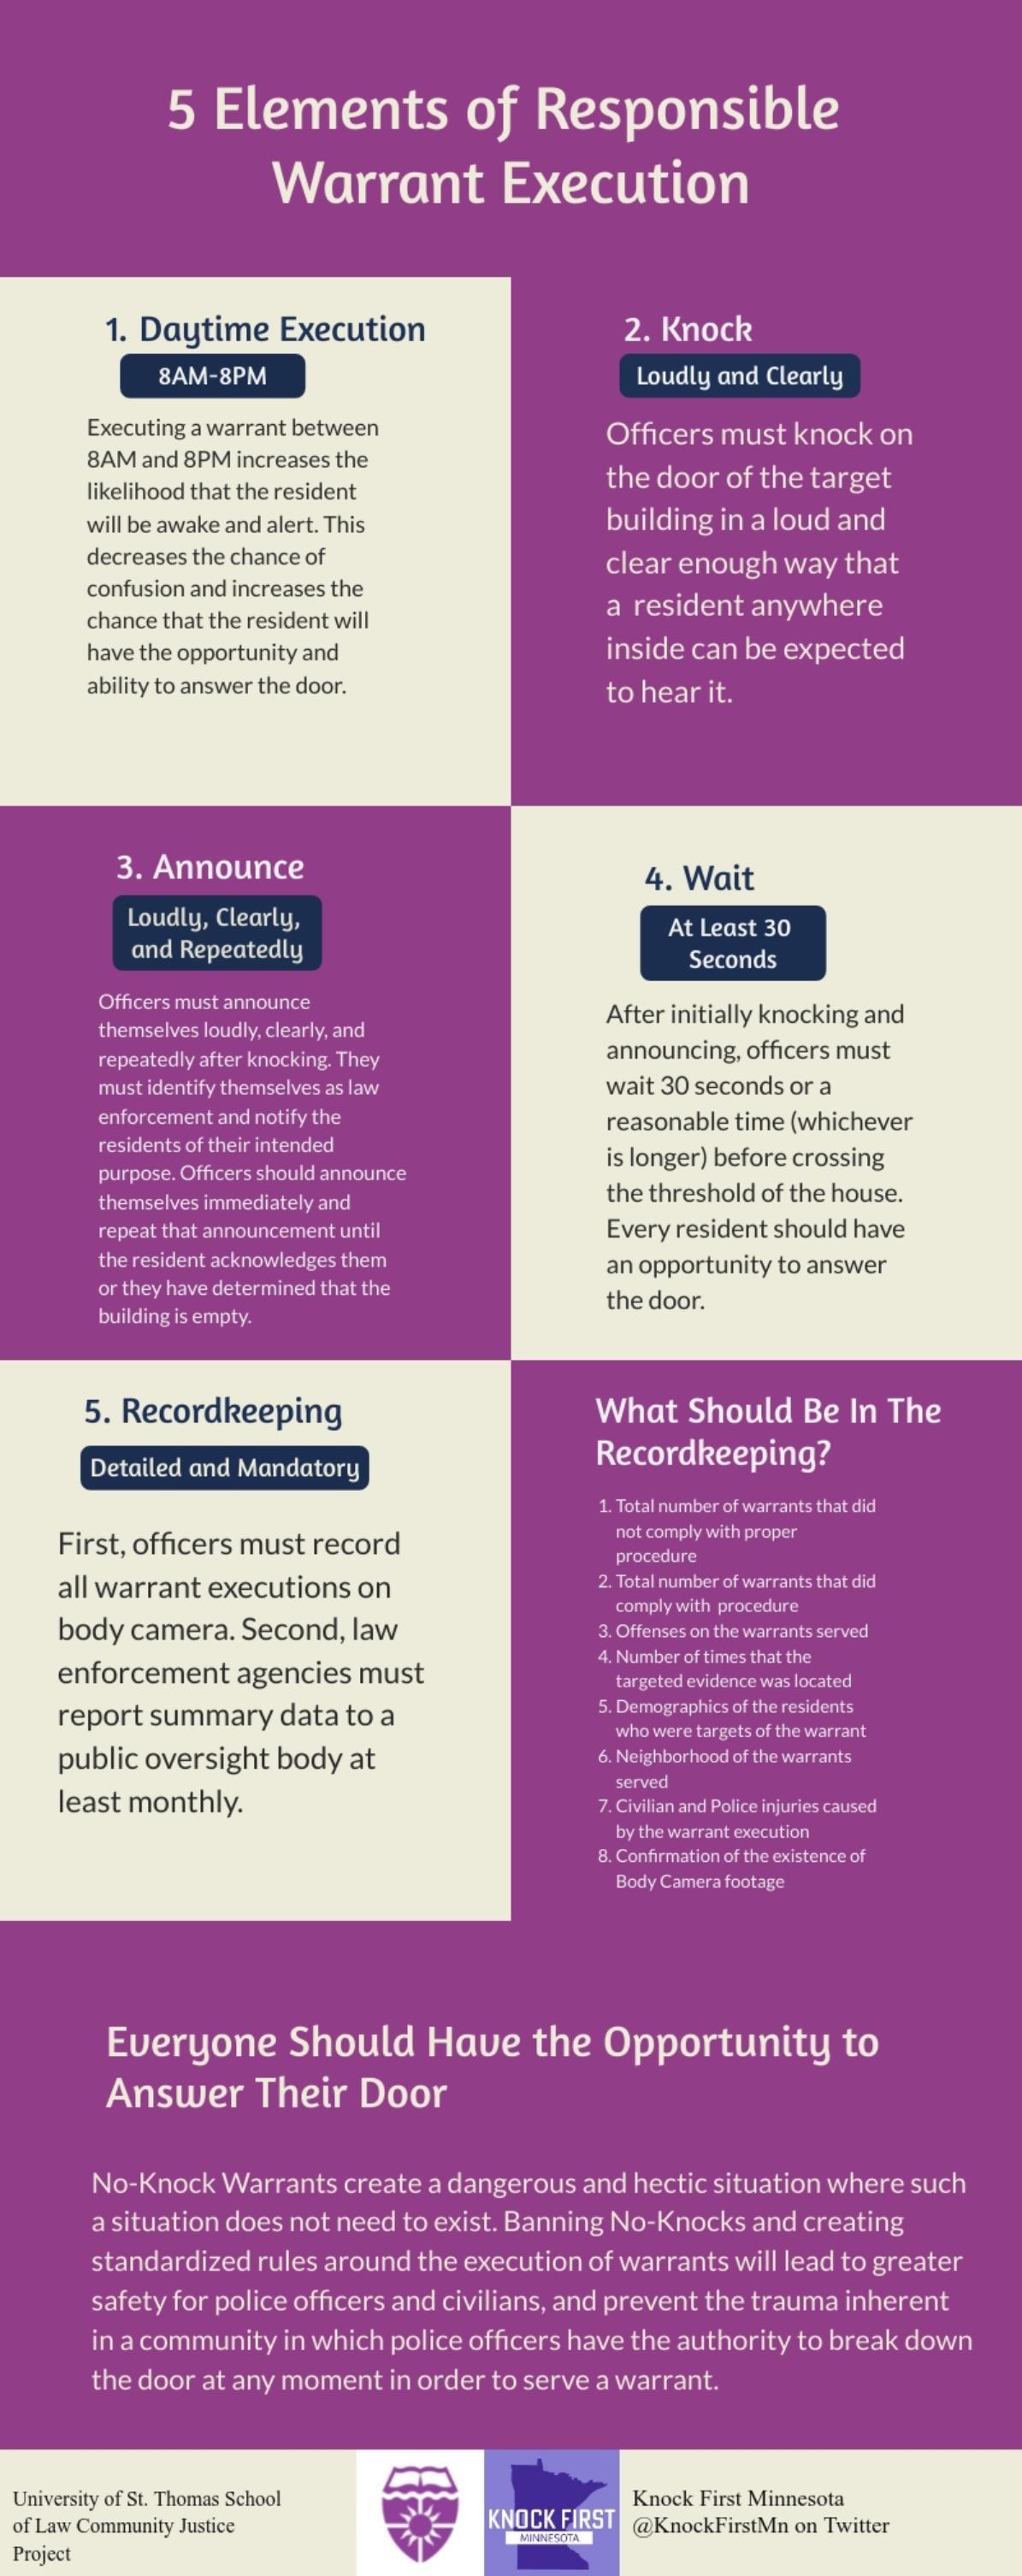 Information graphic regarding 5 elements of responsible warrant execution